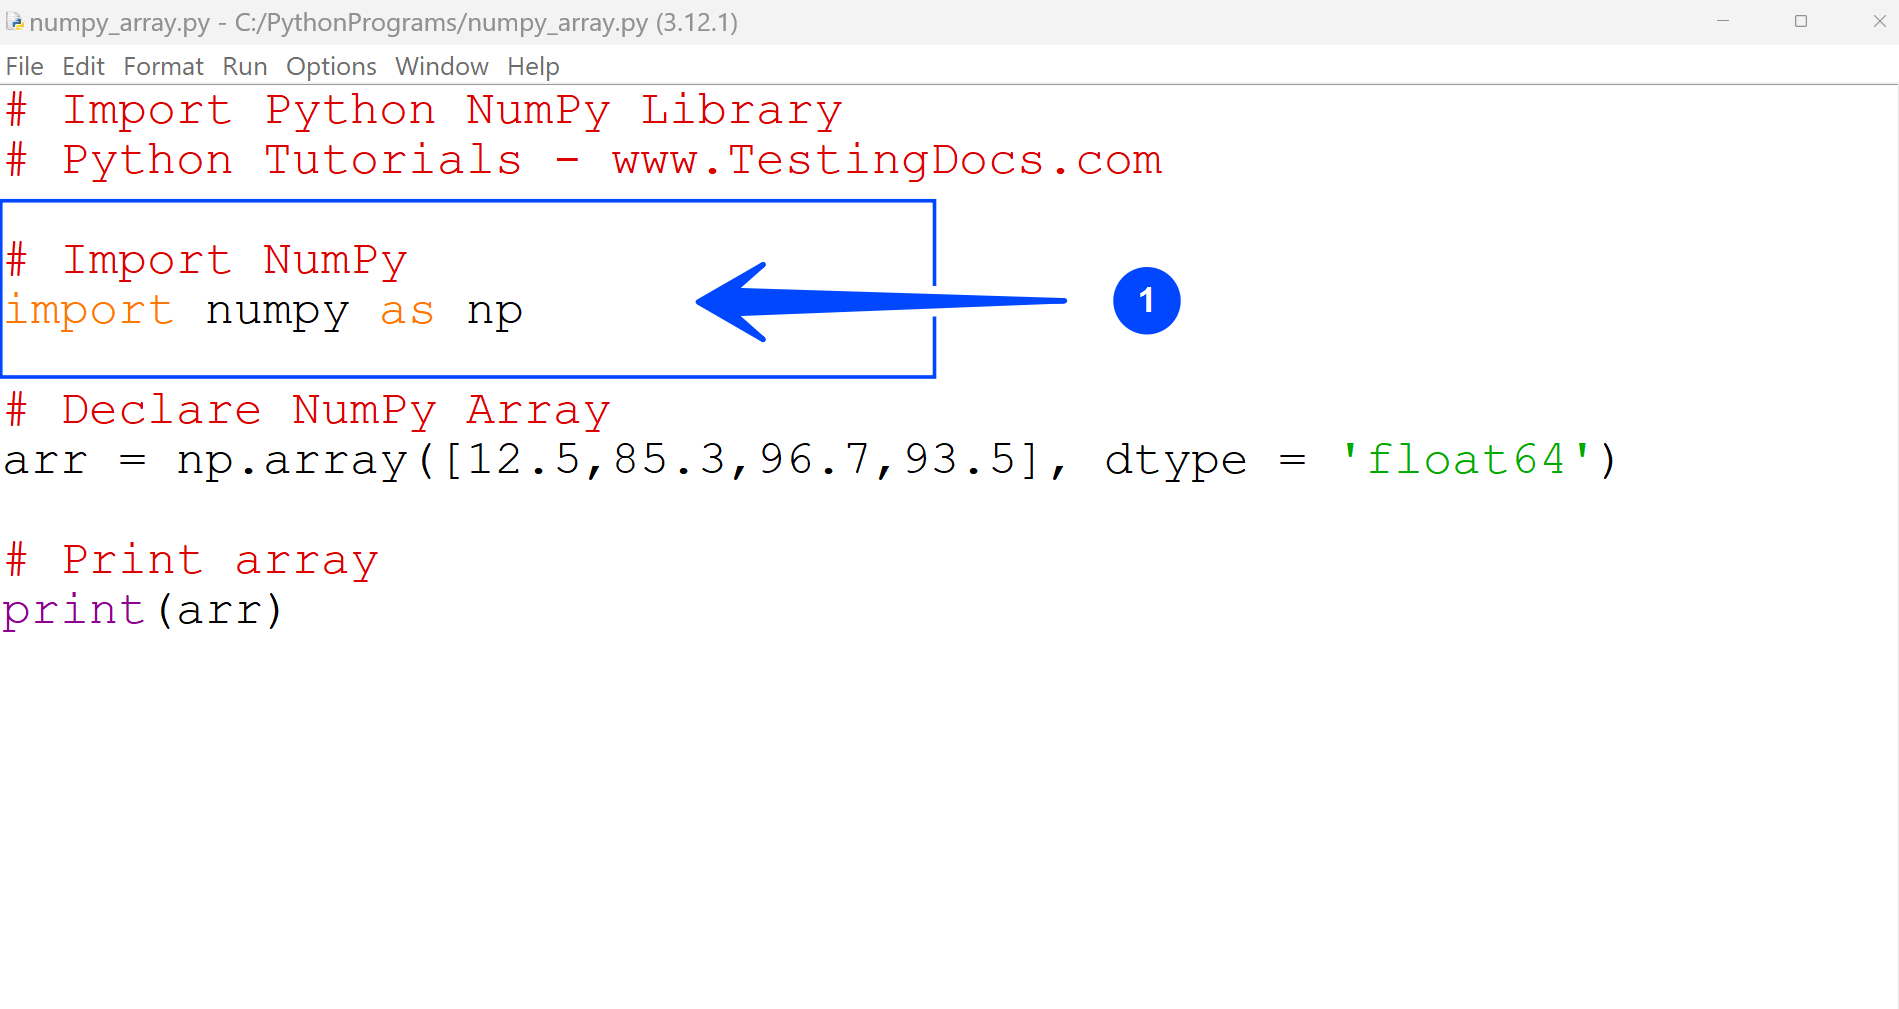 Import Python NumPy Library